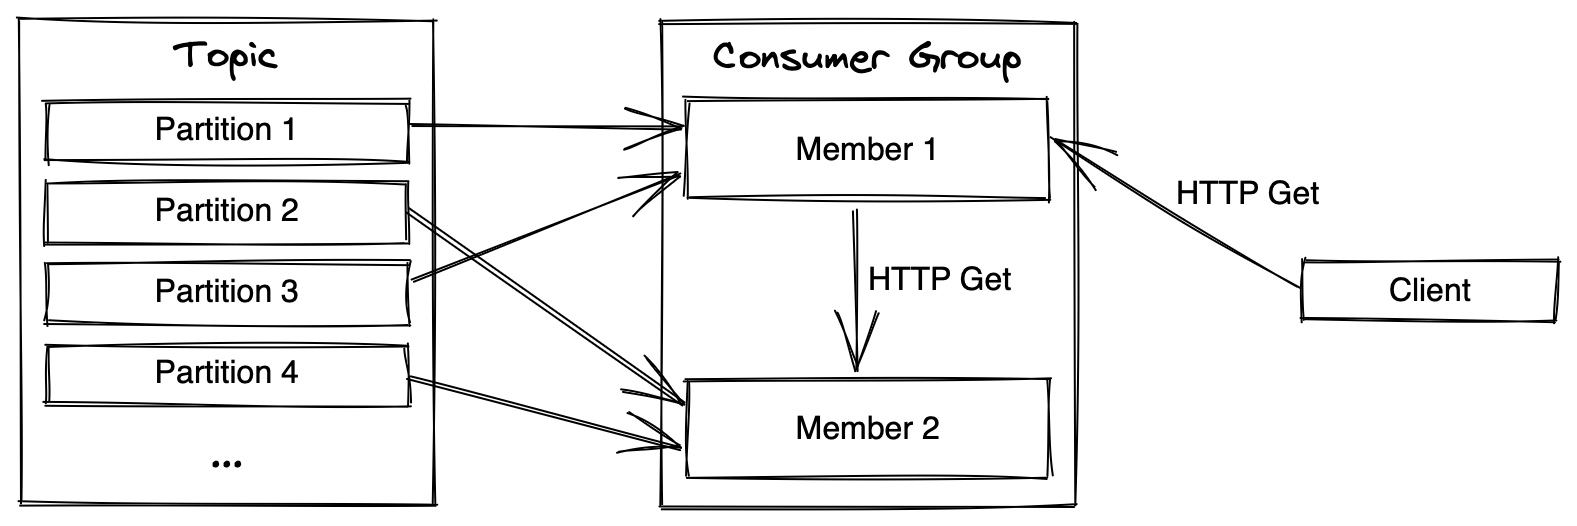 Kafka Consumer Group Diagram